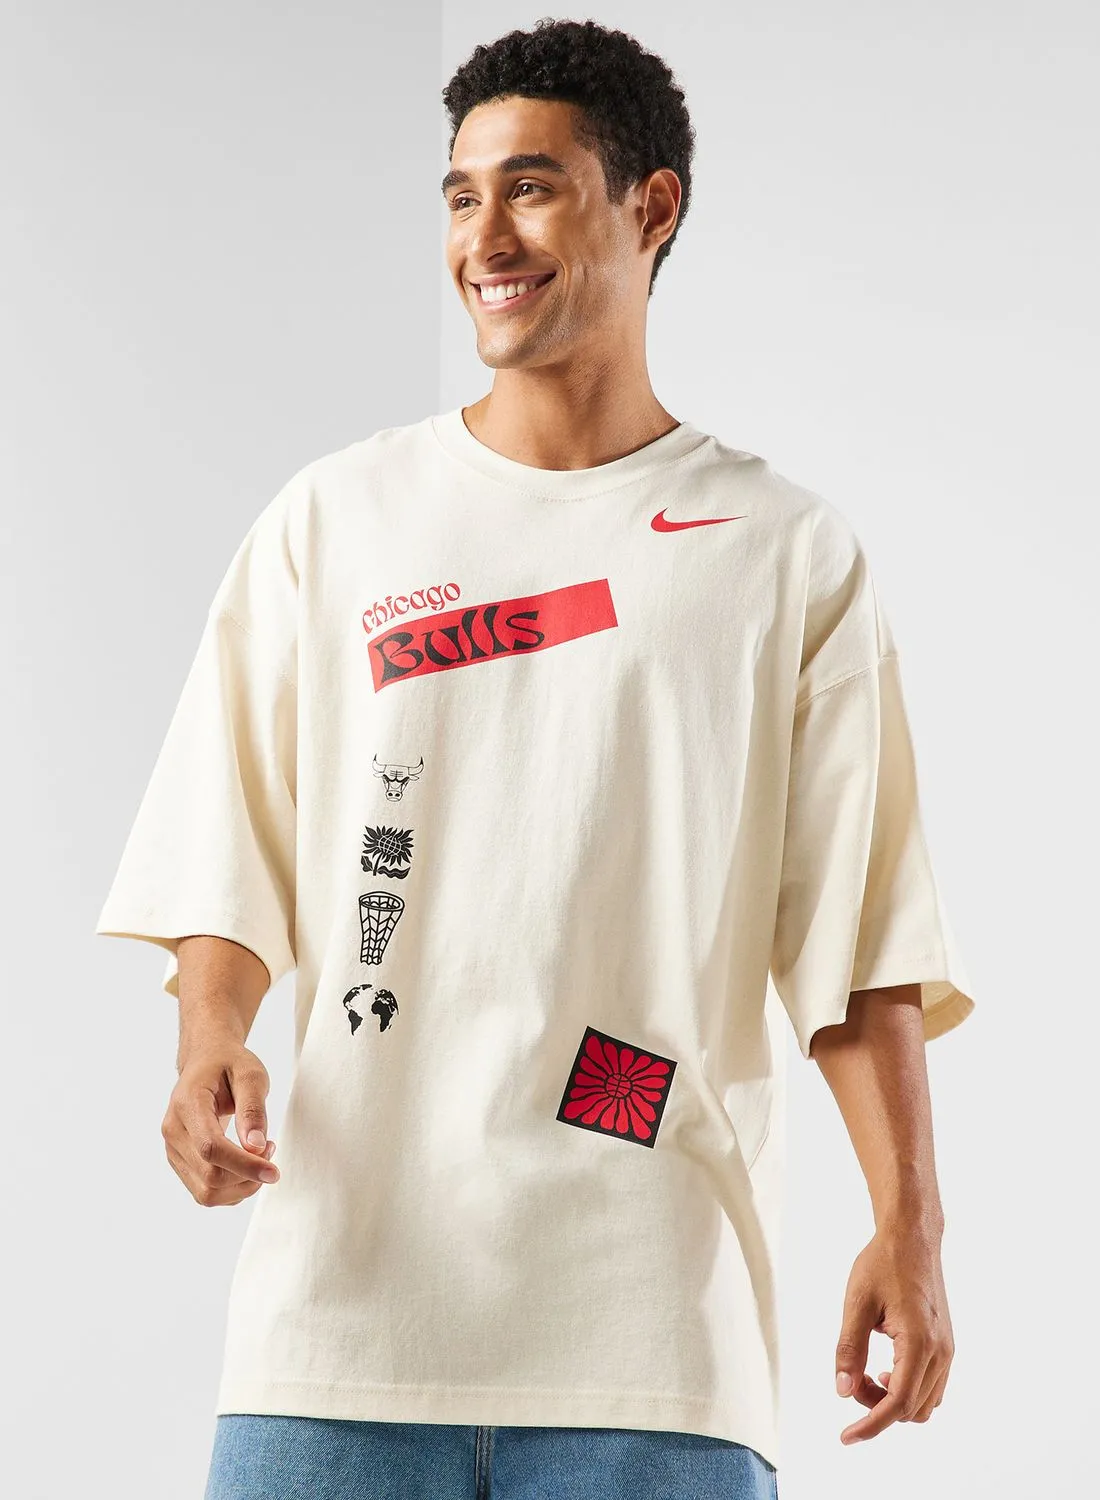 Nike Chicago Bulls T-Shirt